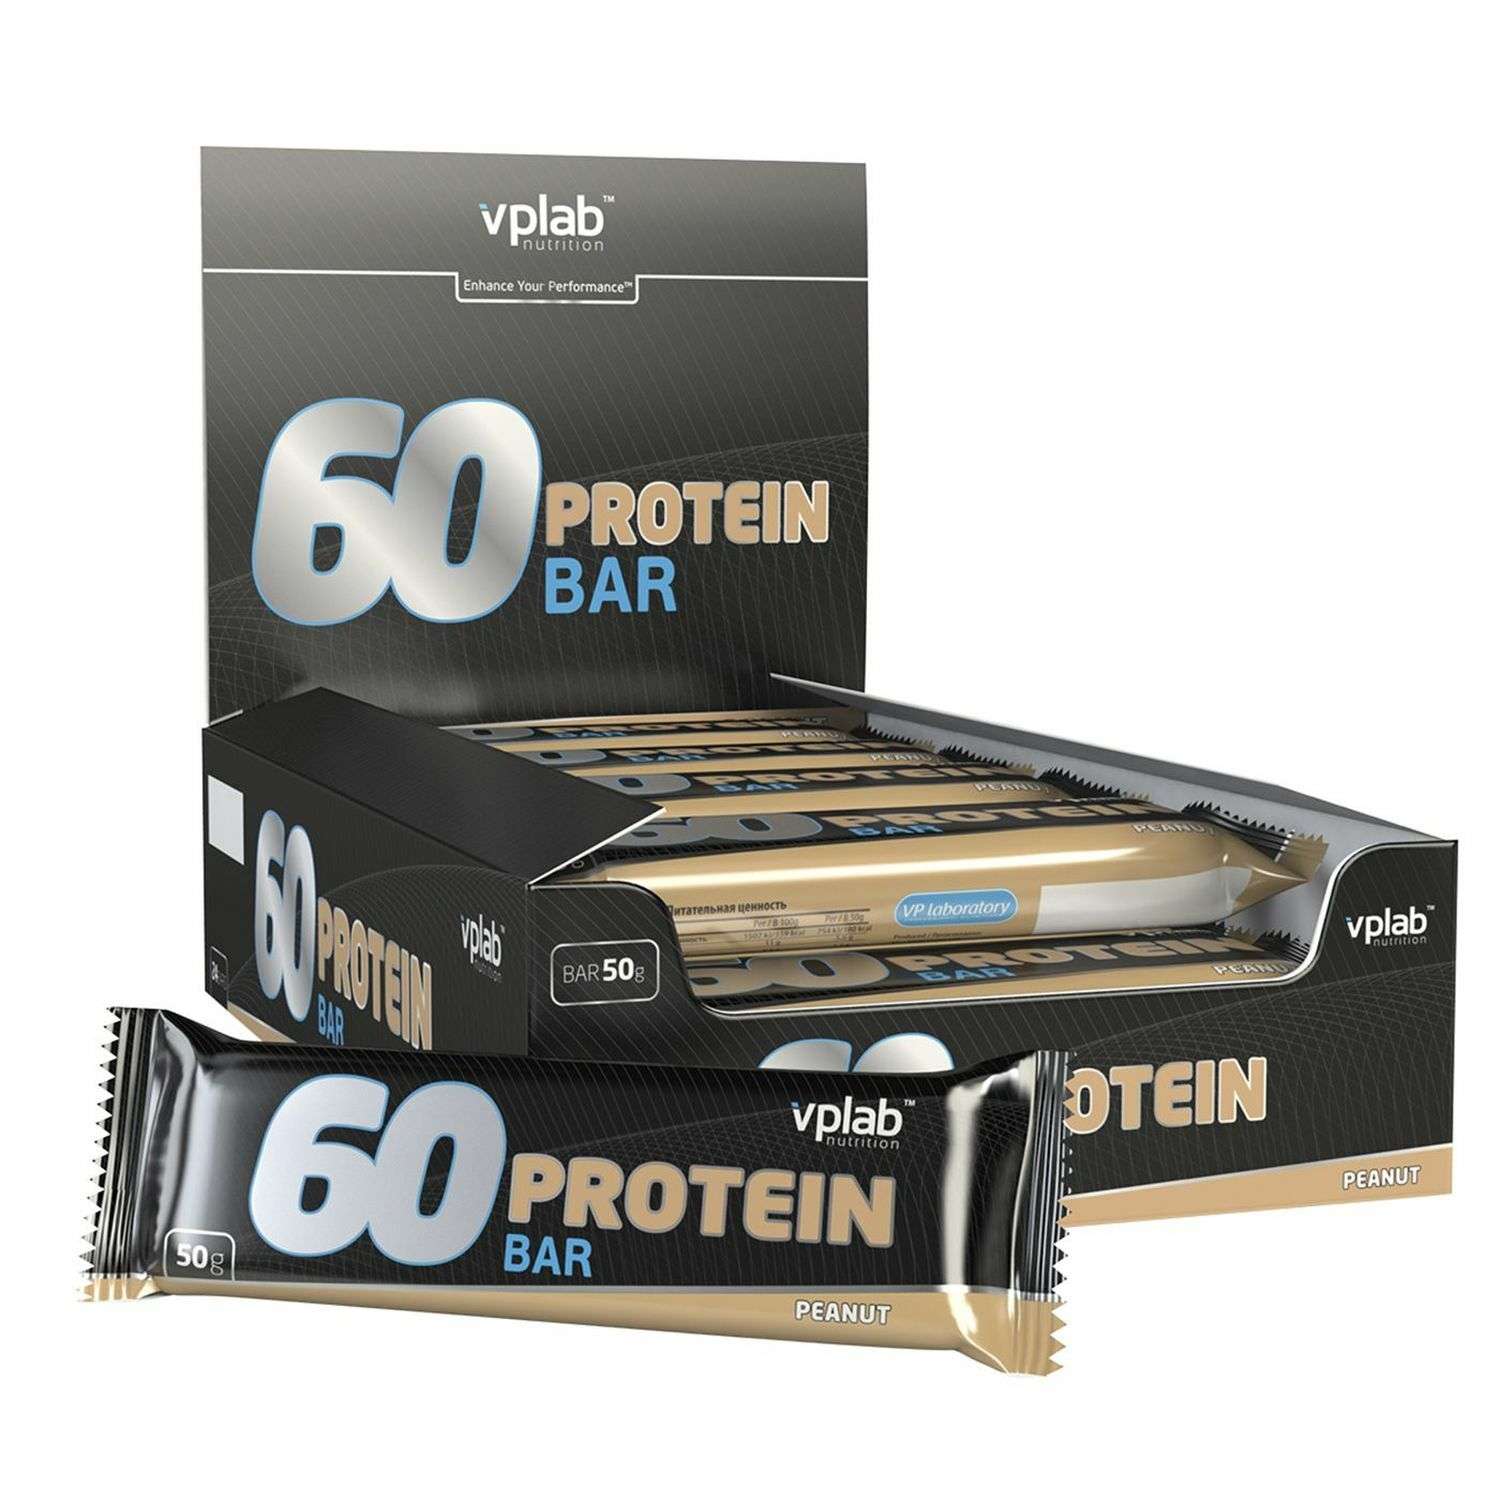 Батончик VPLAB Protein bar 60% арахис 50г - фото 2